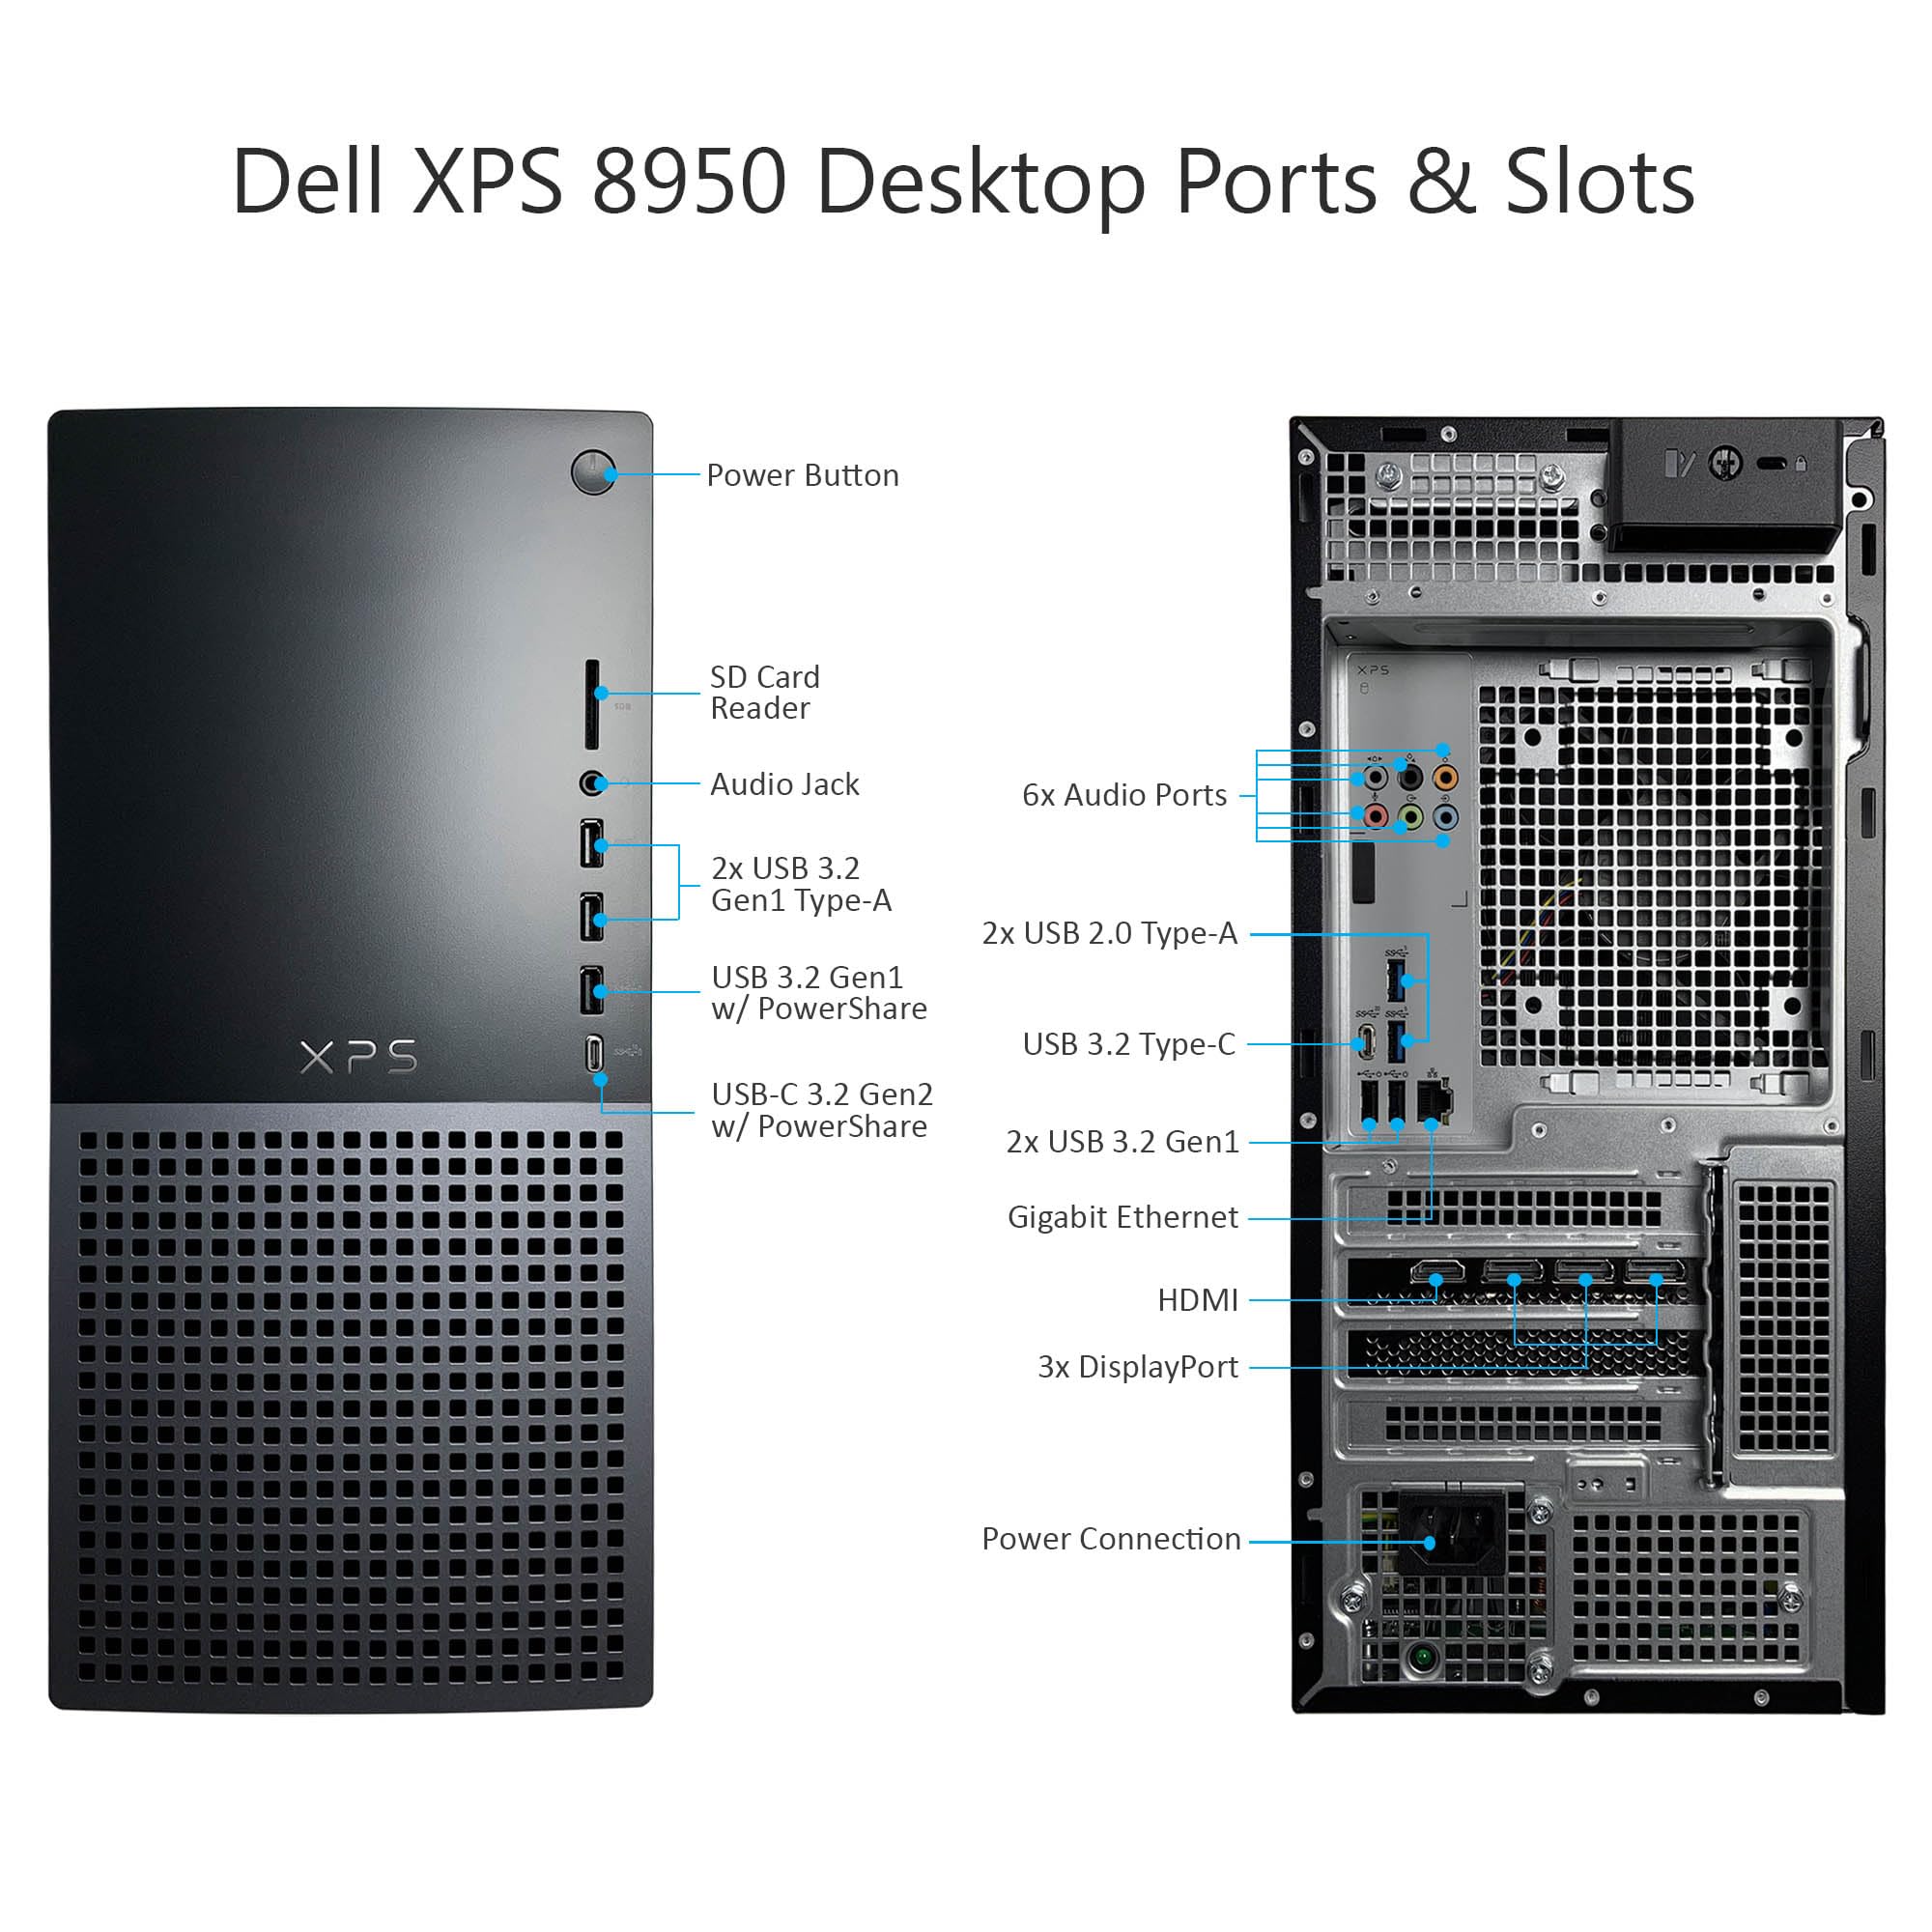 Dell XPS 8950 Gaming Desktop Computer - 12th Gen Intel Core i9-12900K up to 5.2 GHz CPU, 128GB DDR5 RAM, 512GB NVMe SSD + 6TB HDD, AMD Radeon RX 6700XT 12GB, Killer Wi-Fi 6, Windows 11 Pro